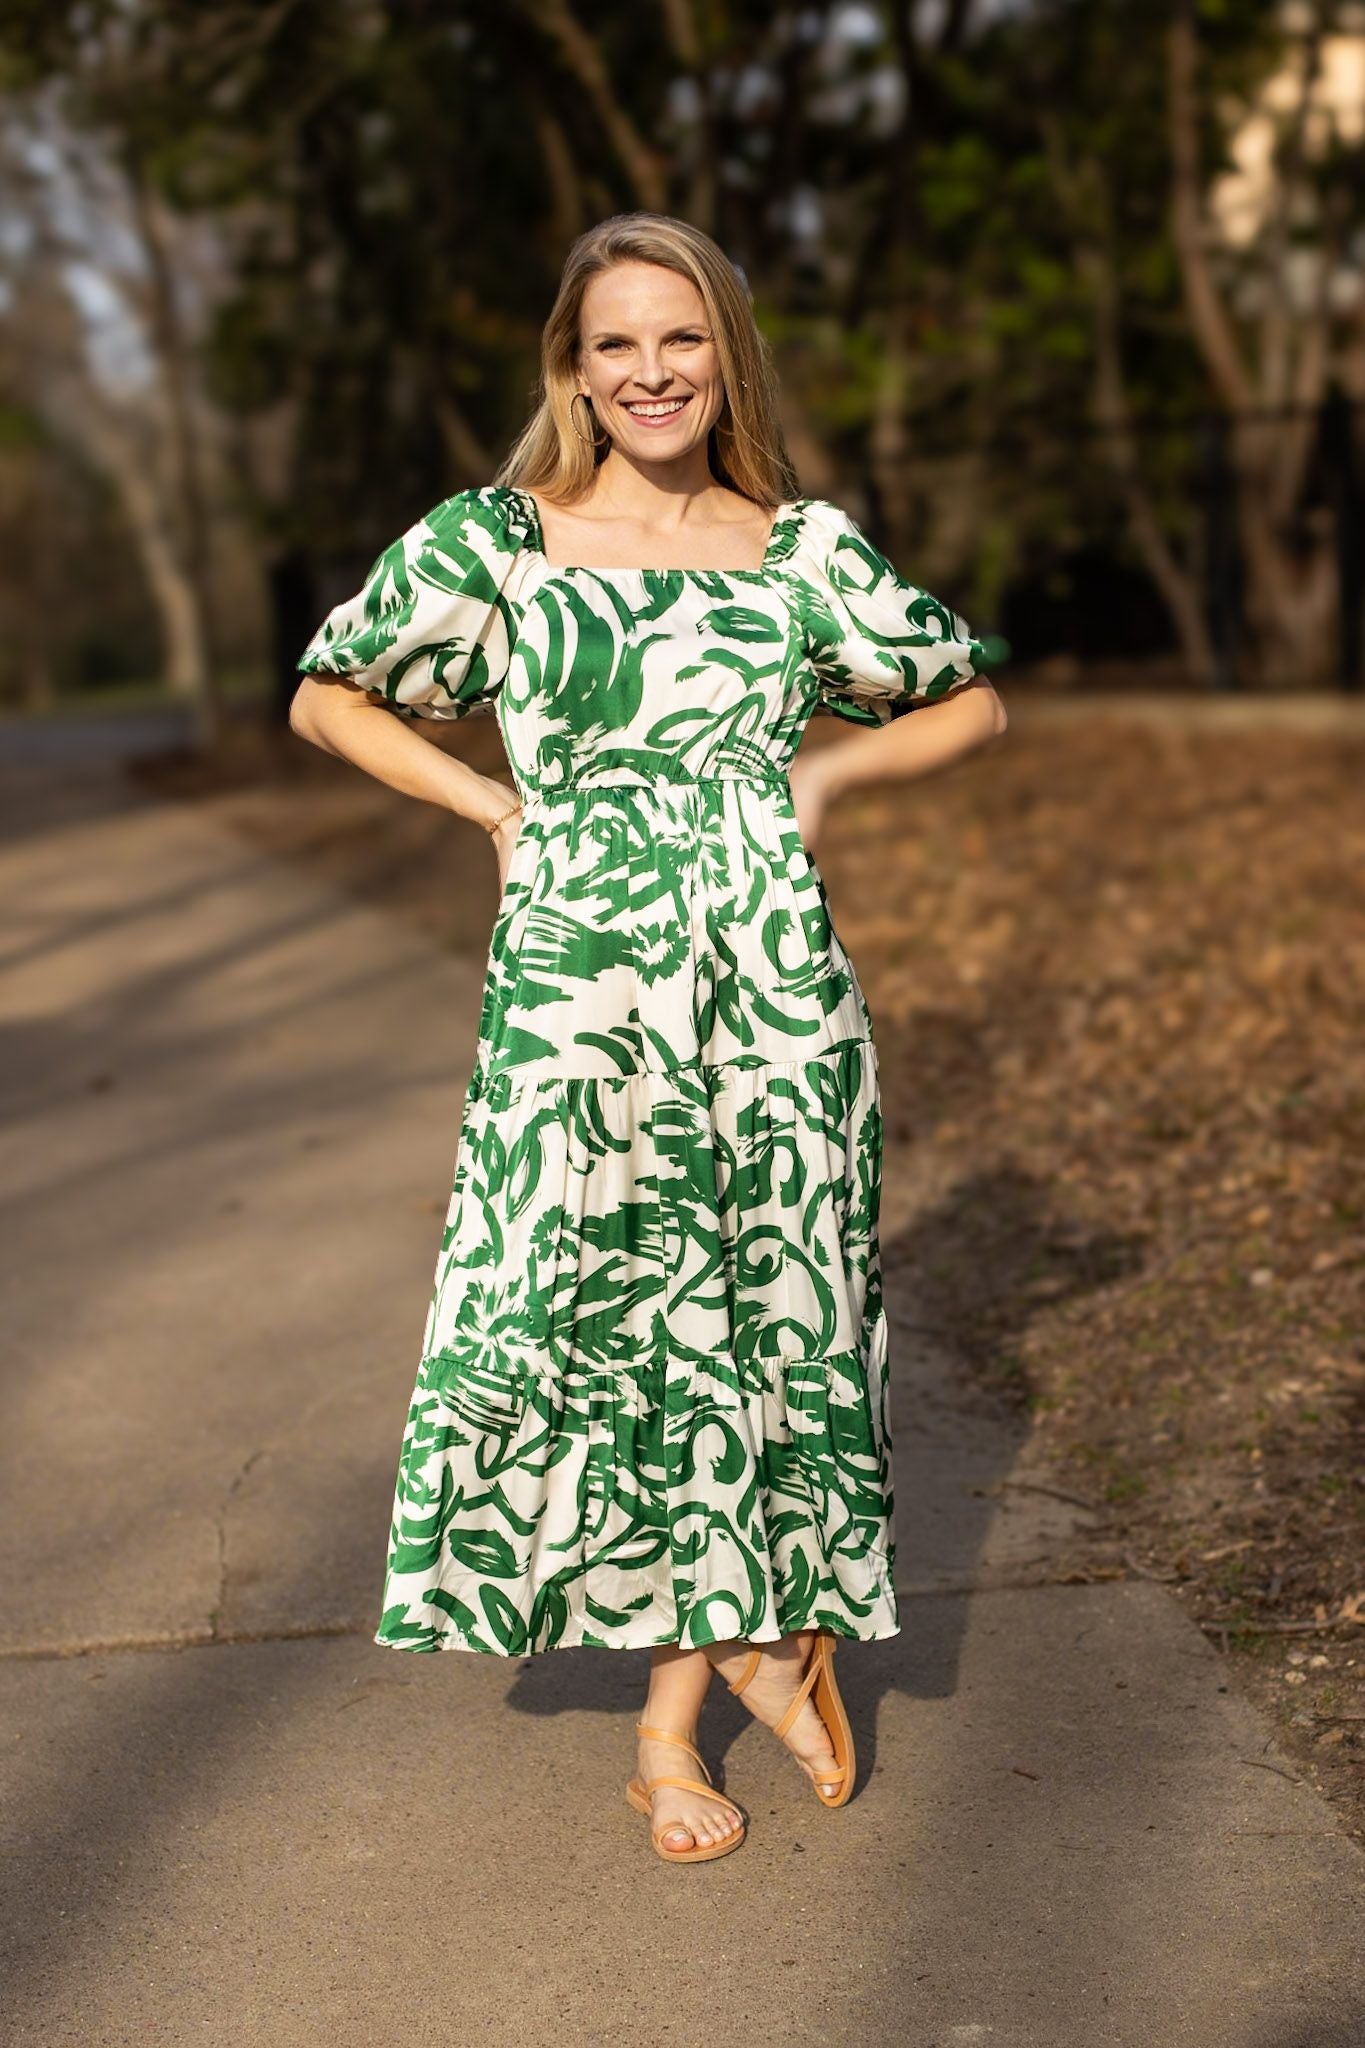 The Elizabeth Green & Ivory Puff Sleeve Dress